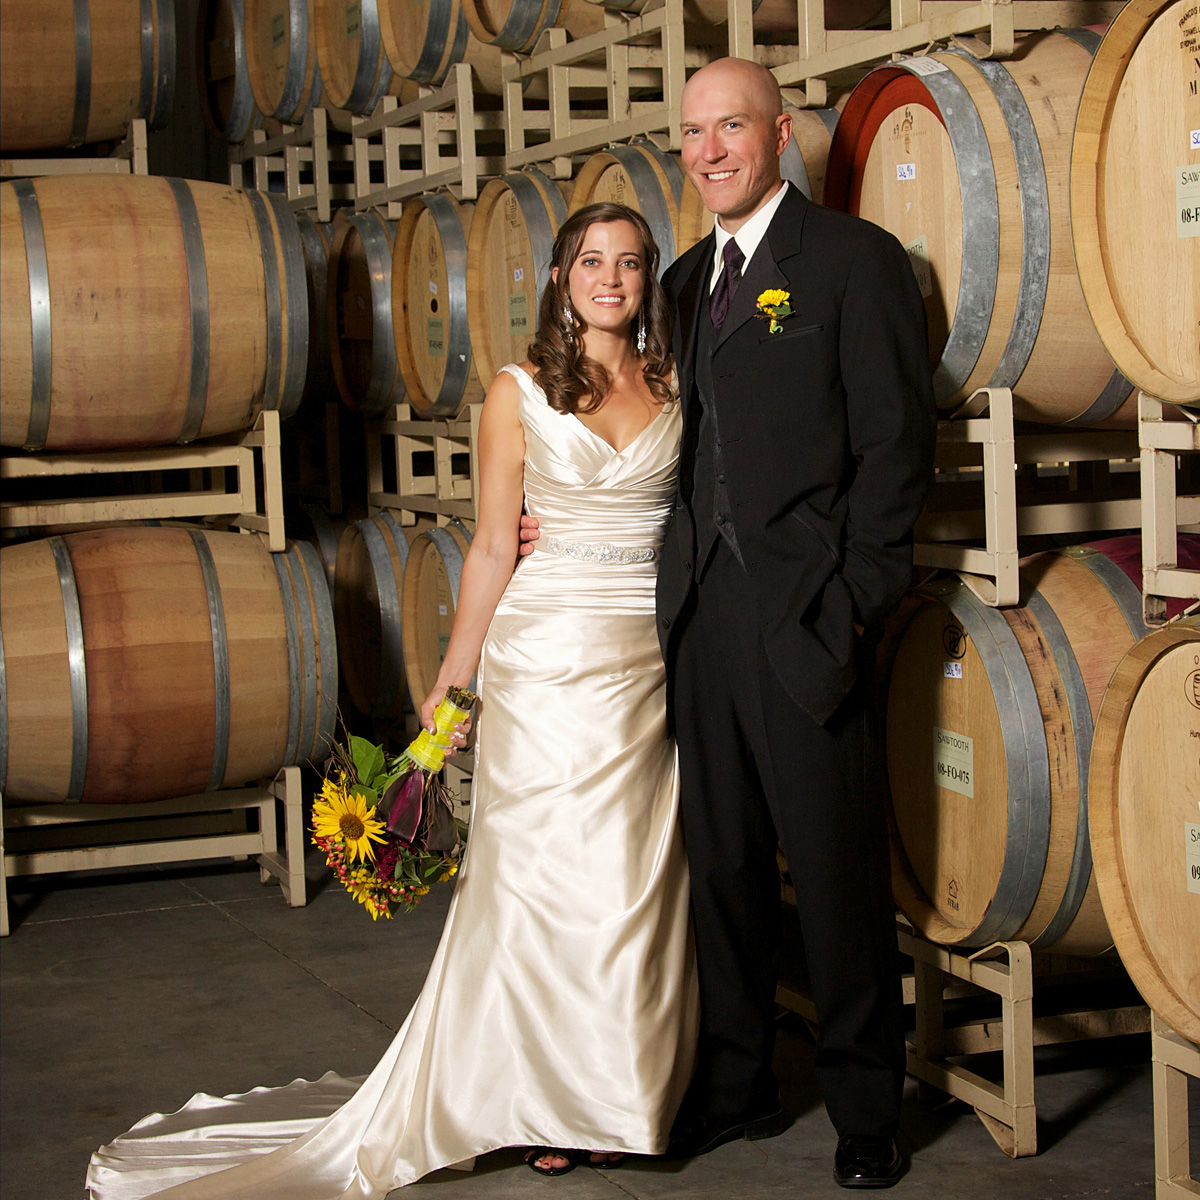 wedding photo in winery barrell room